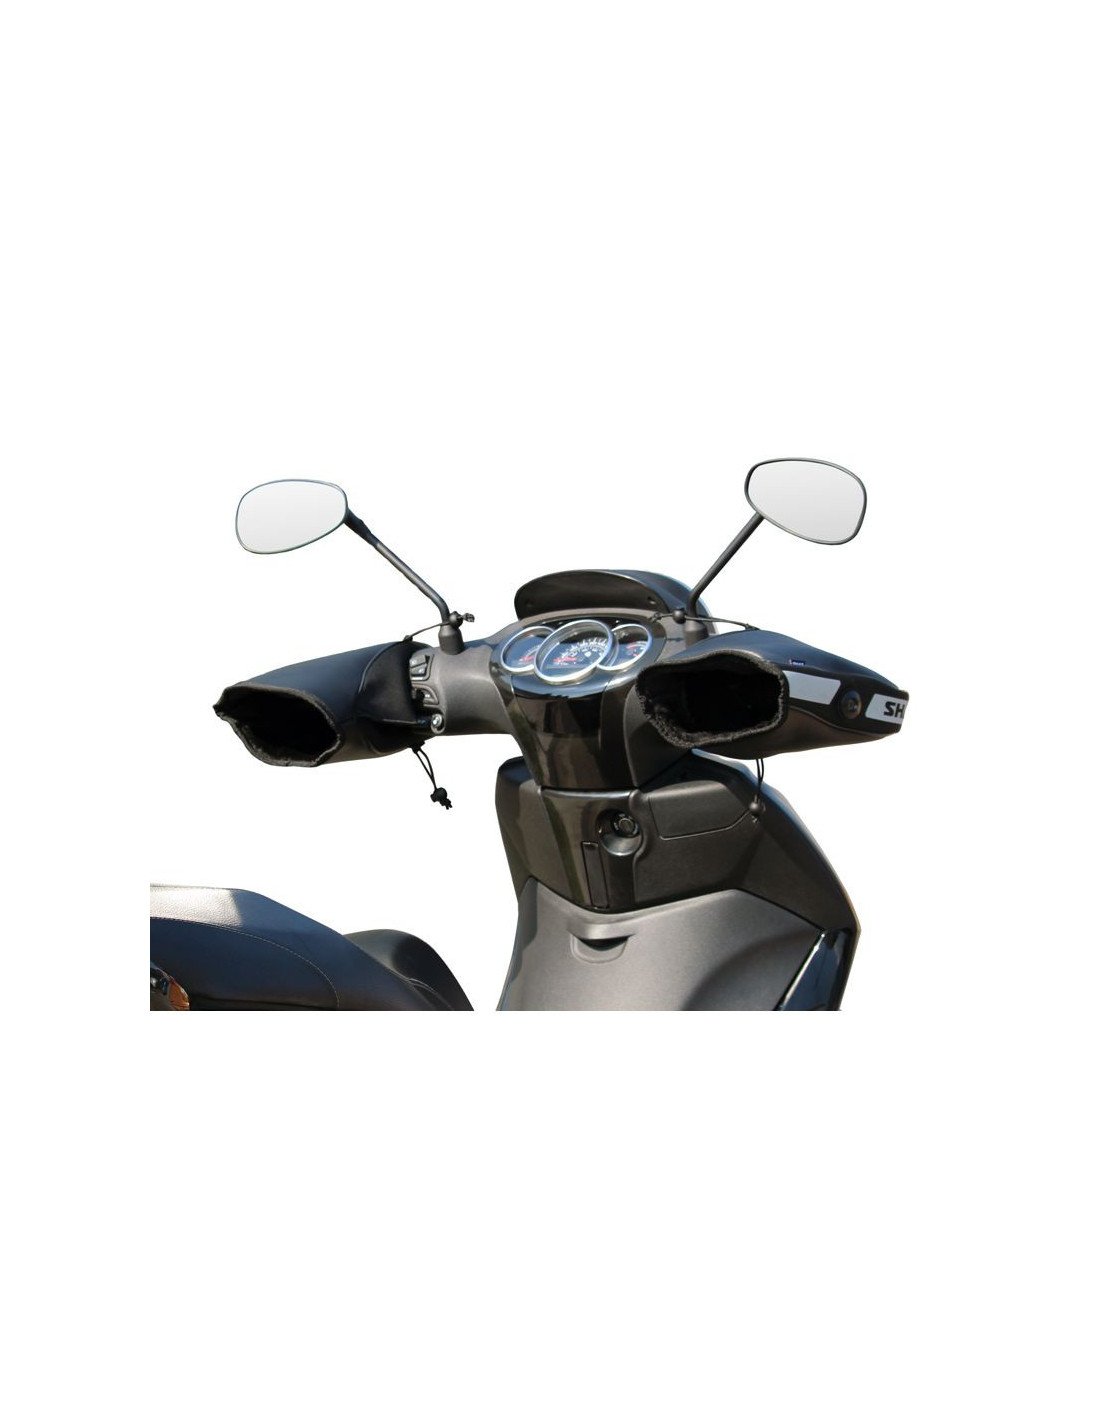 Manchons SHAD SR00 maxi-scooter moufles mains protection vent poignée moto  NEUF